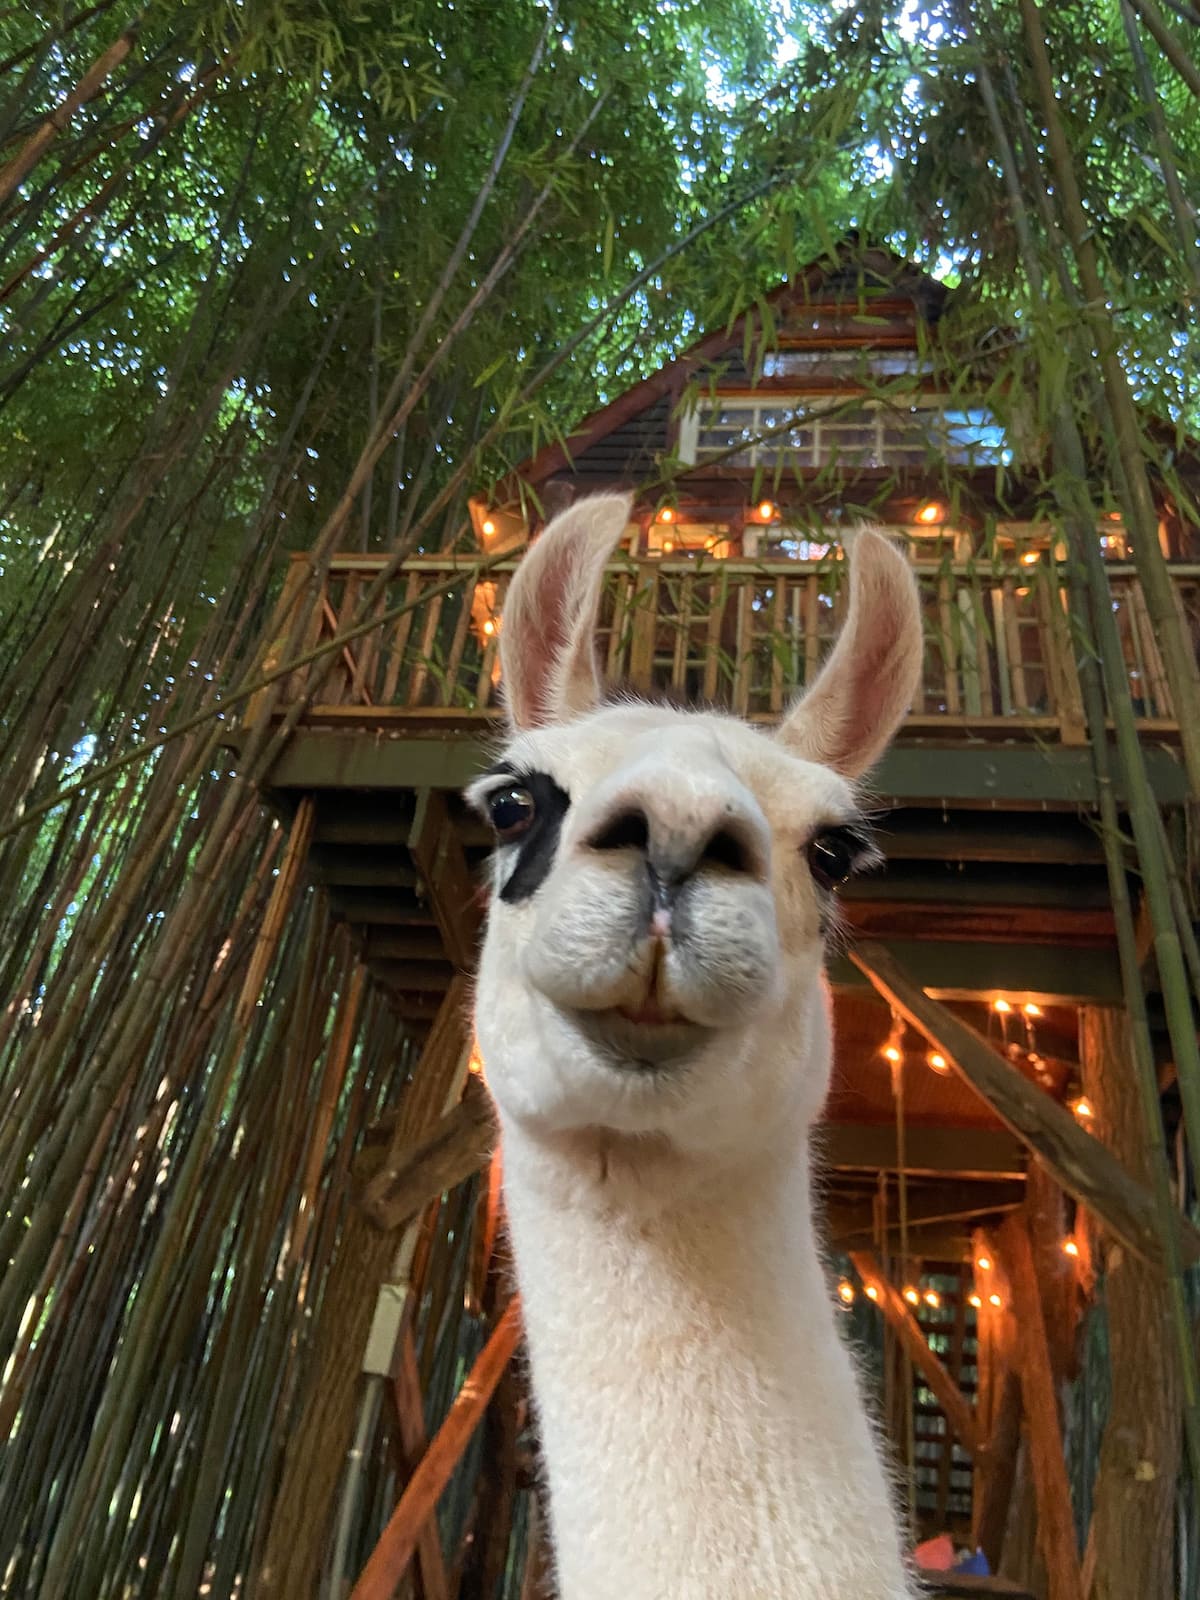 Llama at the Atlanta Bamboo Treehouse